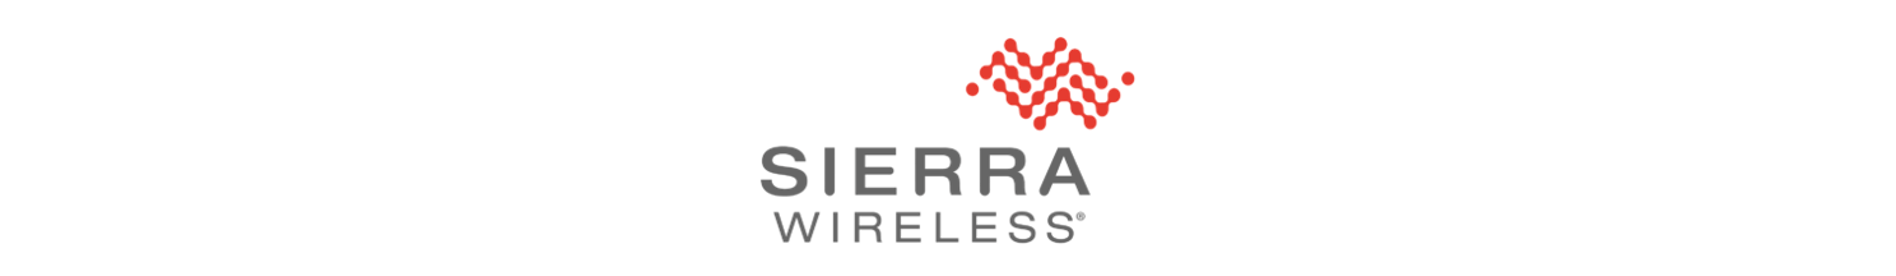 Sierra Wireless Airgain Partner Solutions